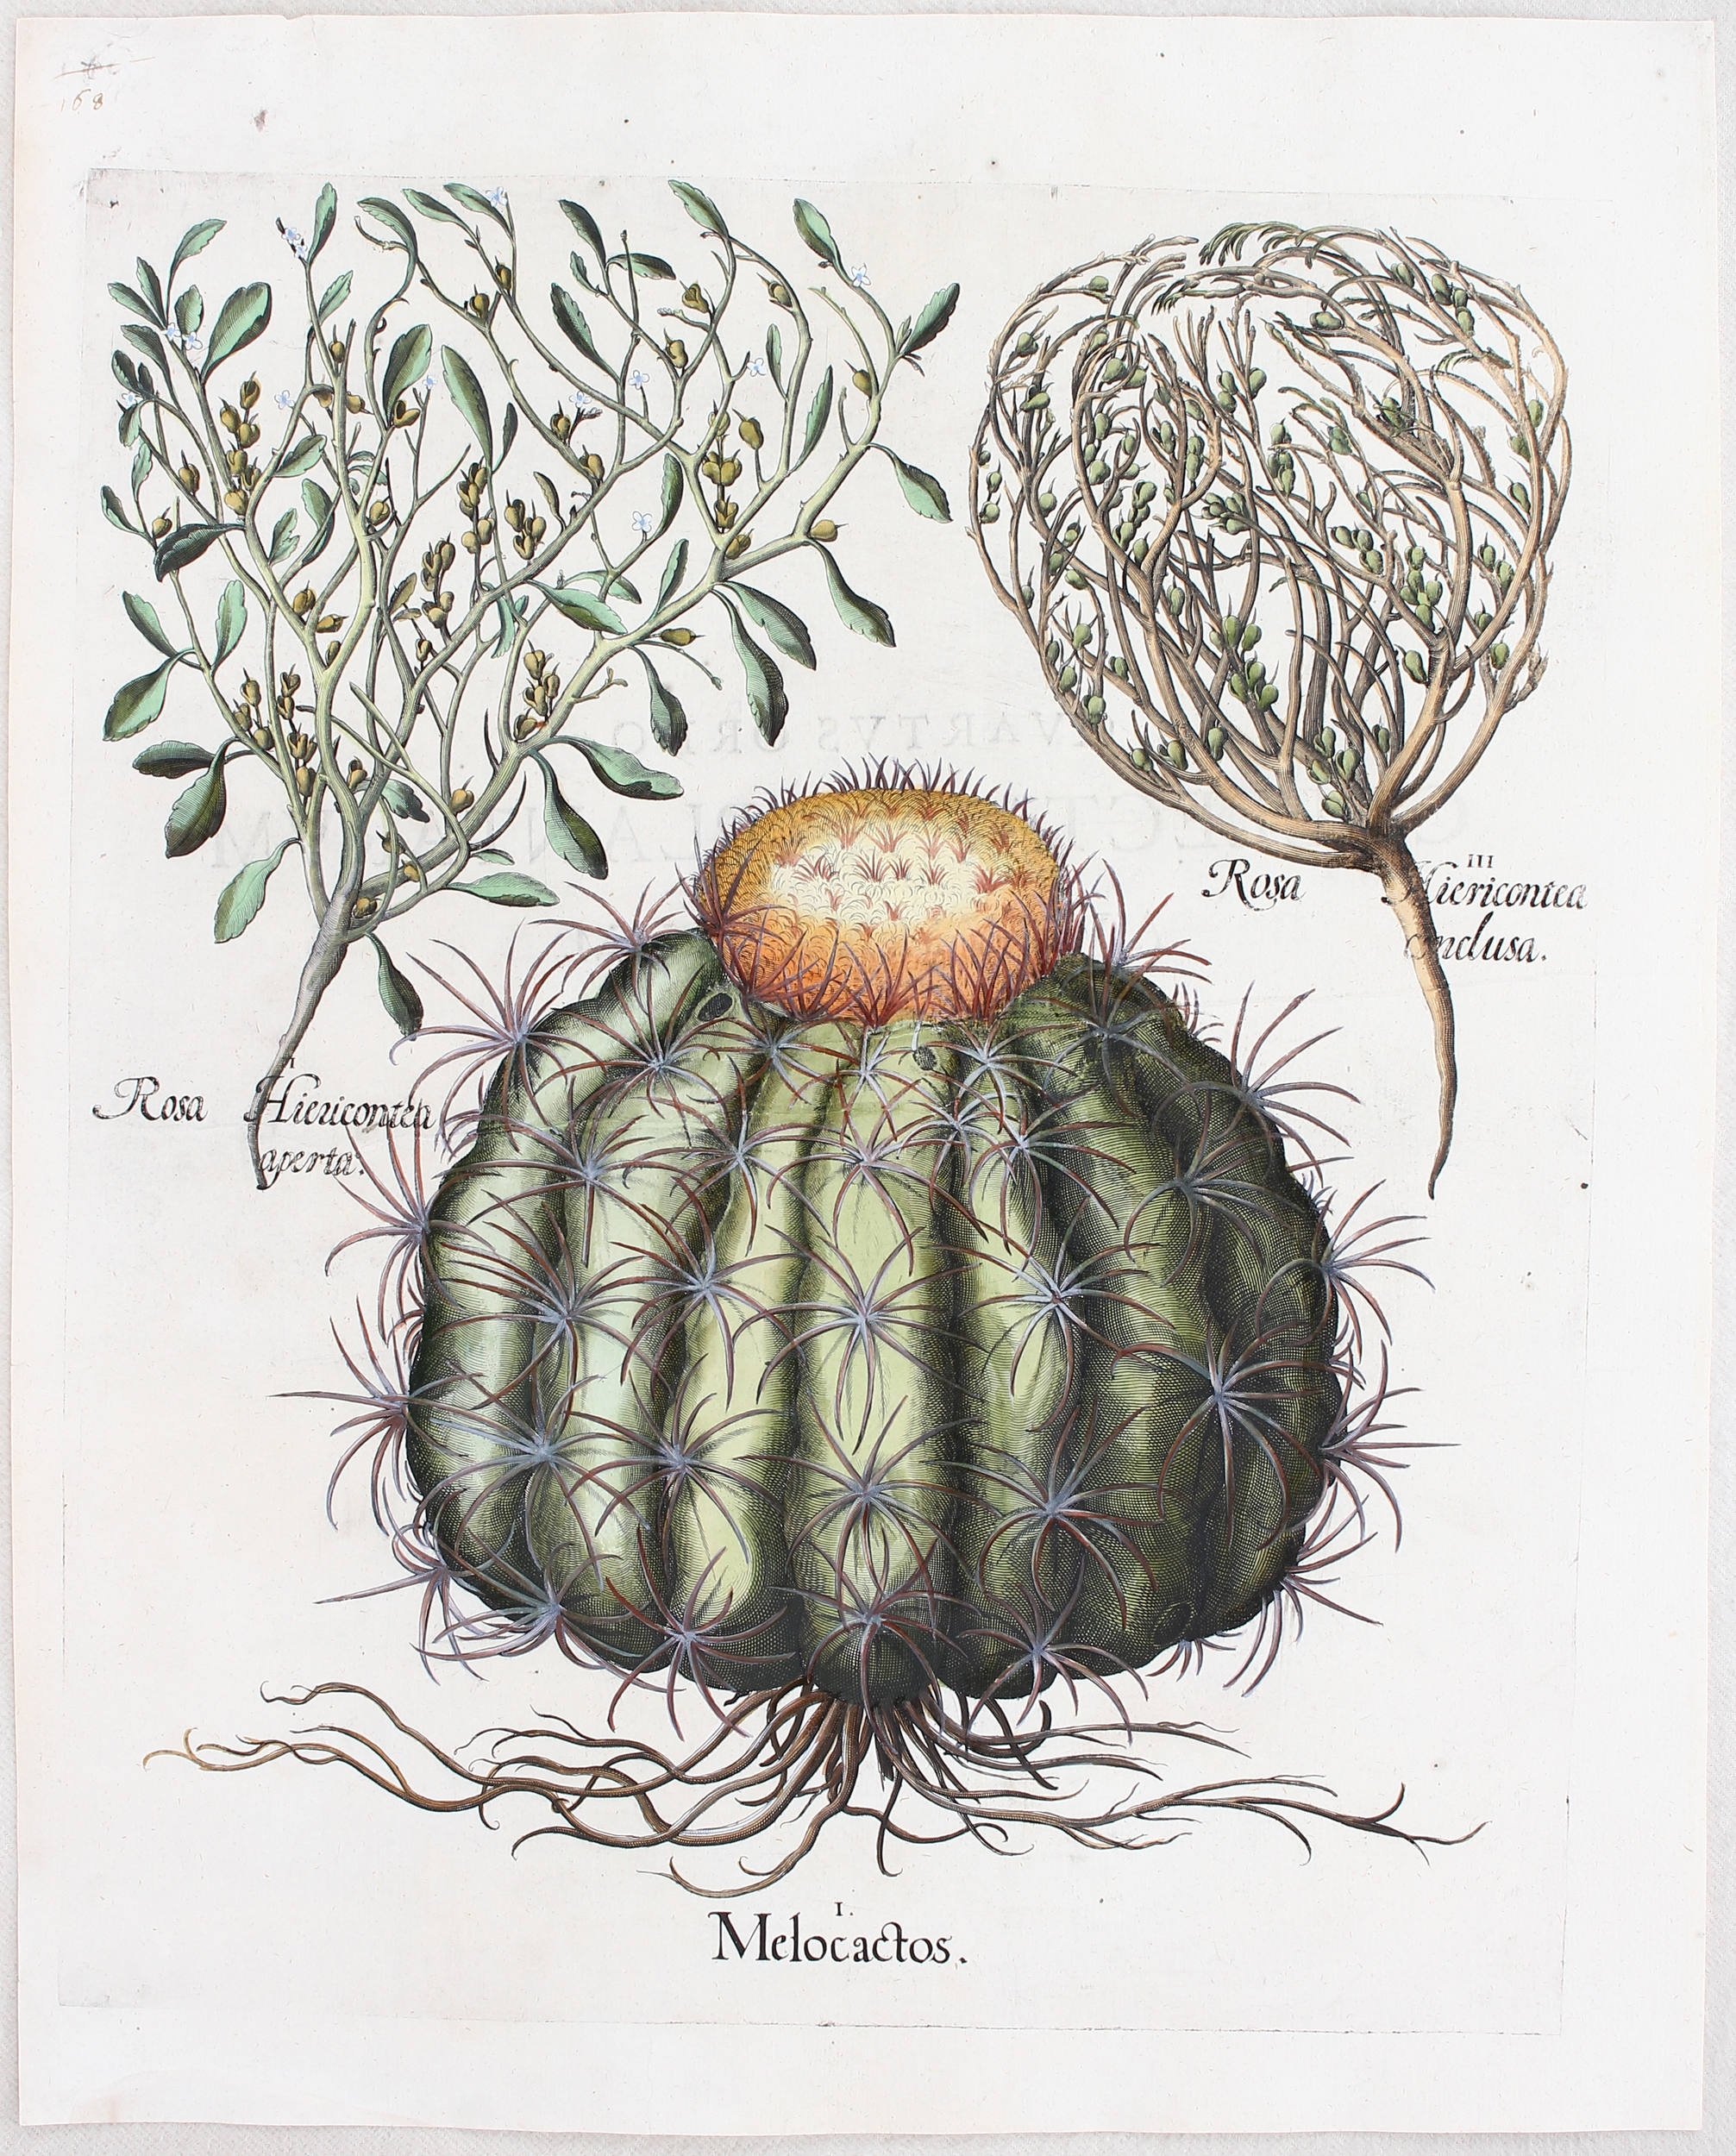 Melocactos, Rosa Hiericontea aperta (&) conclusa (Schwiegermutterstuhl u. Rose von Jericho)